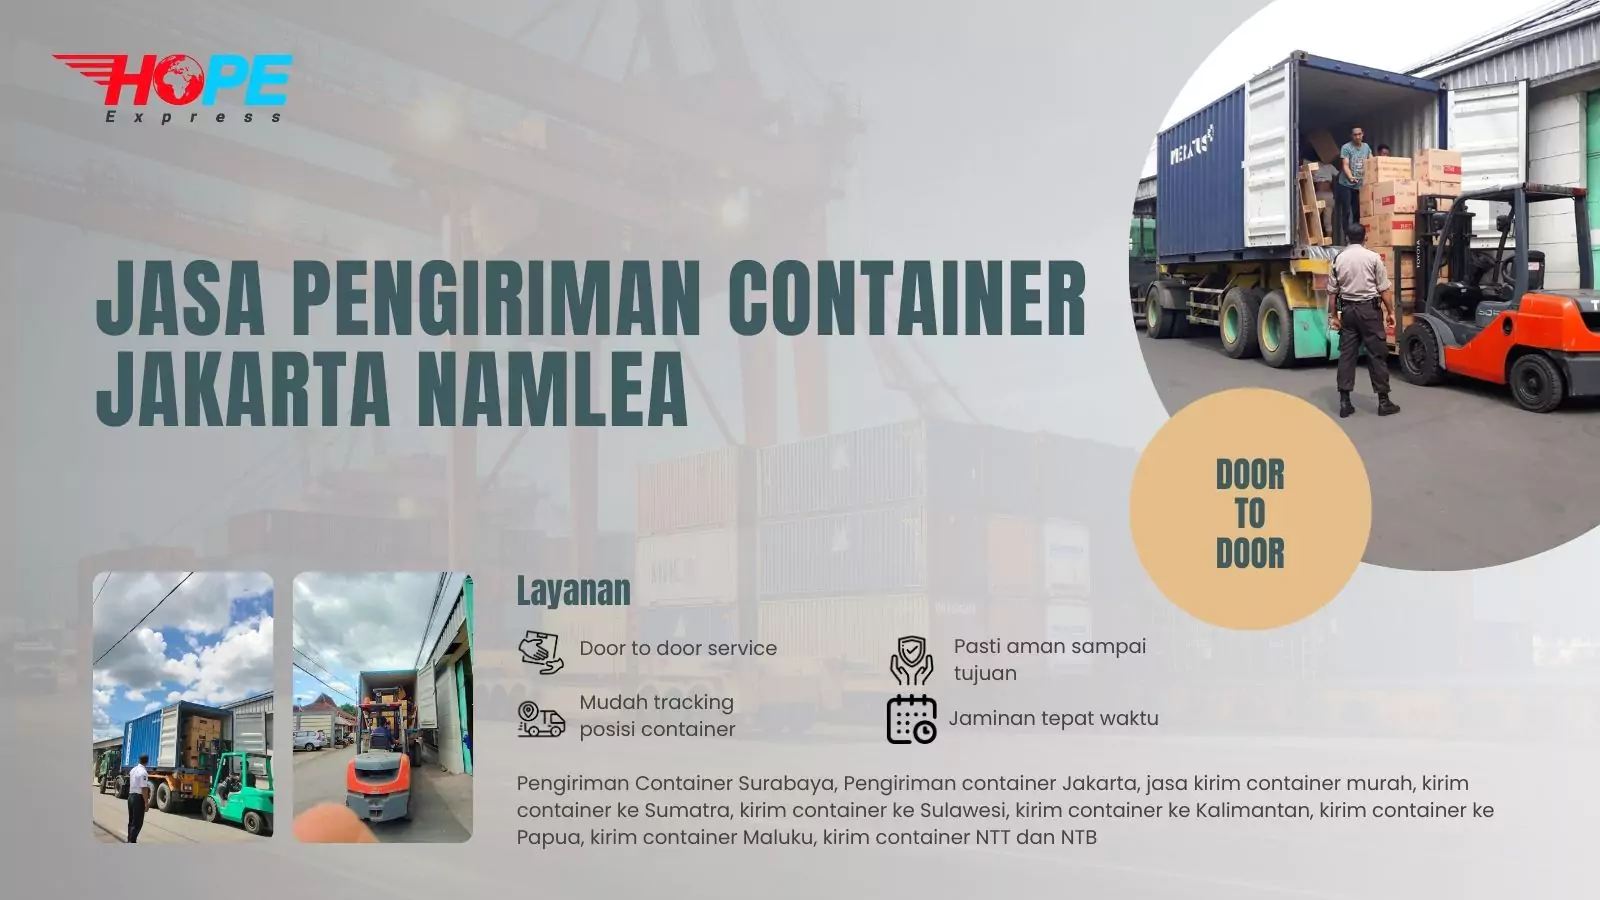 Jasa Pengiriman Container Jakarta Namlea